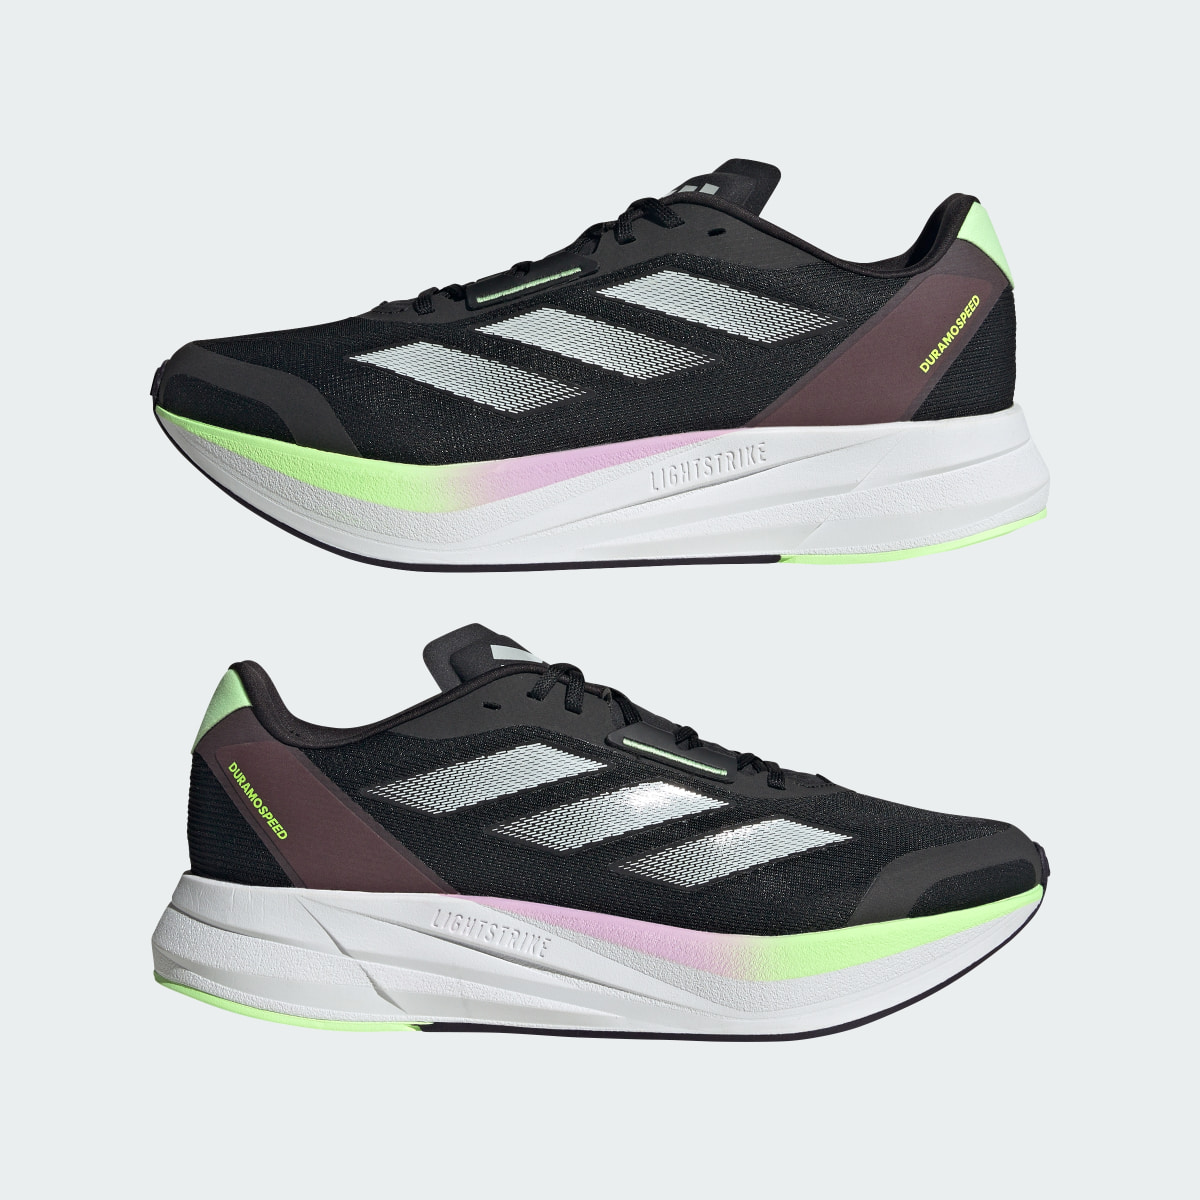 Adidas Duramo Speed Running Shoes. 8